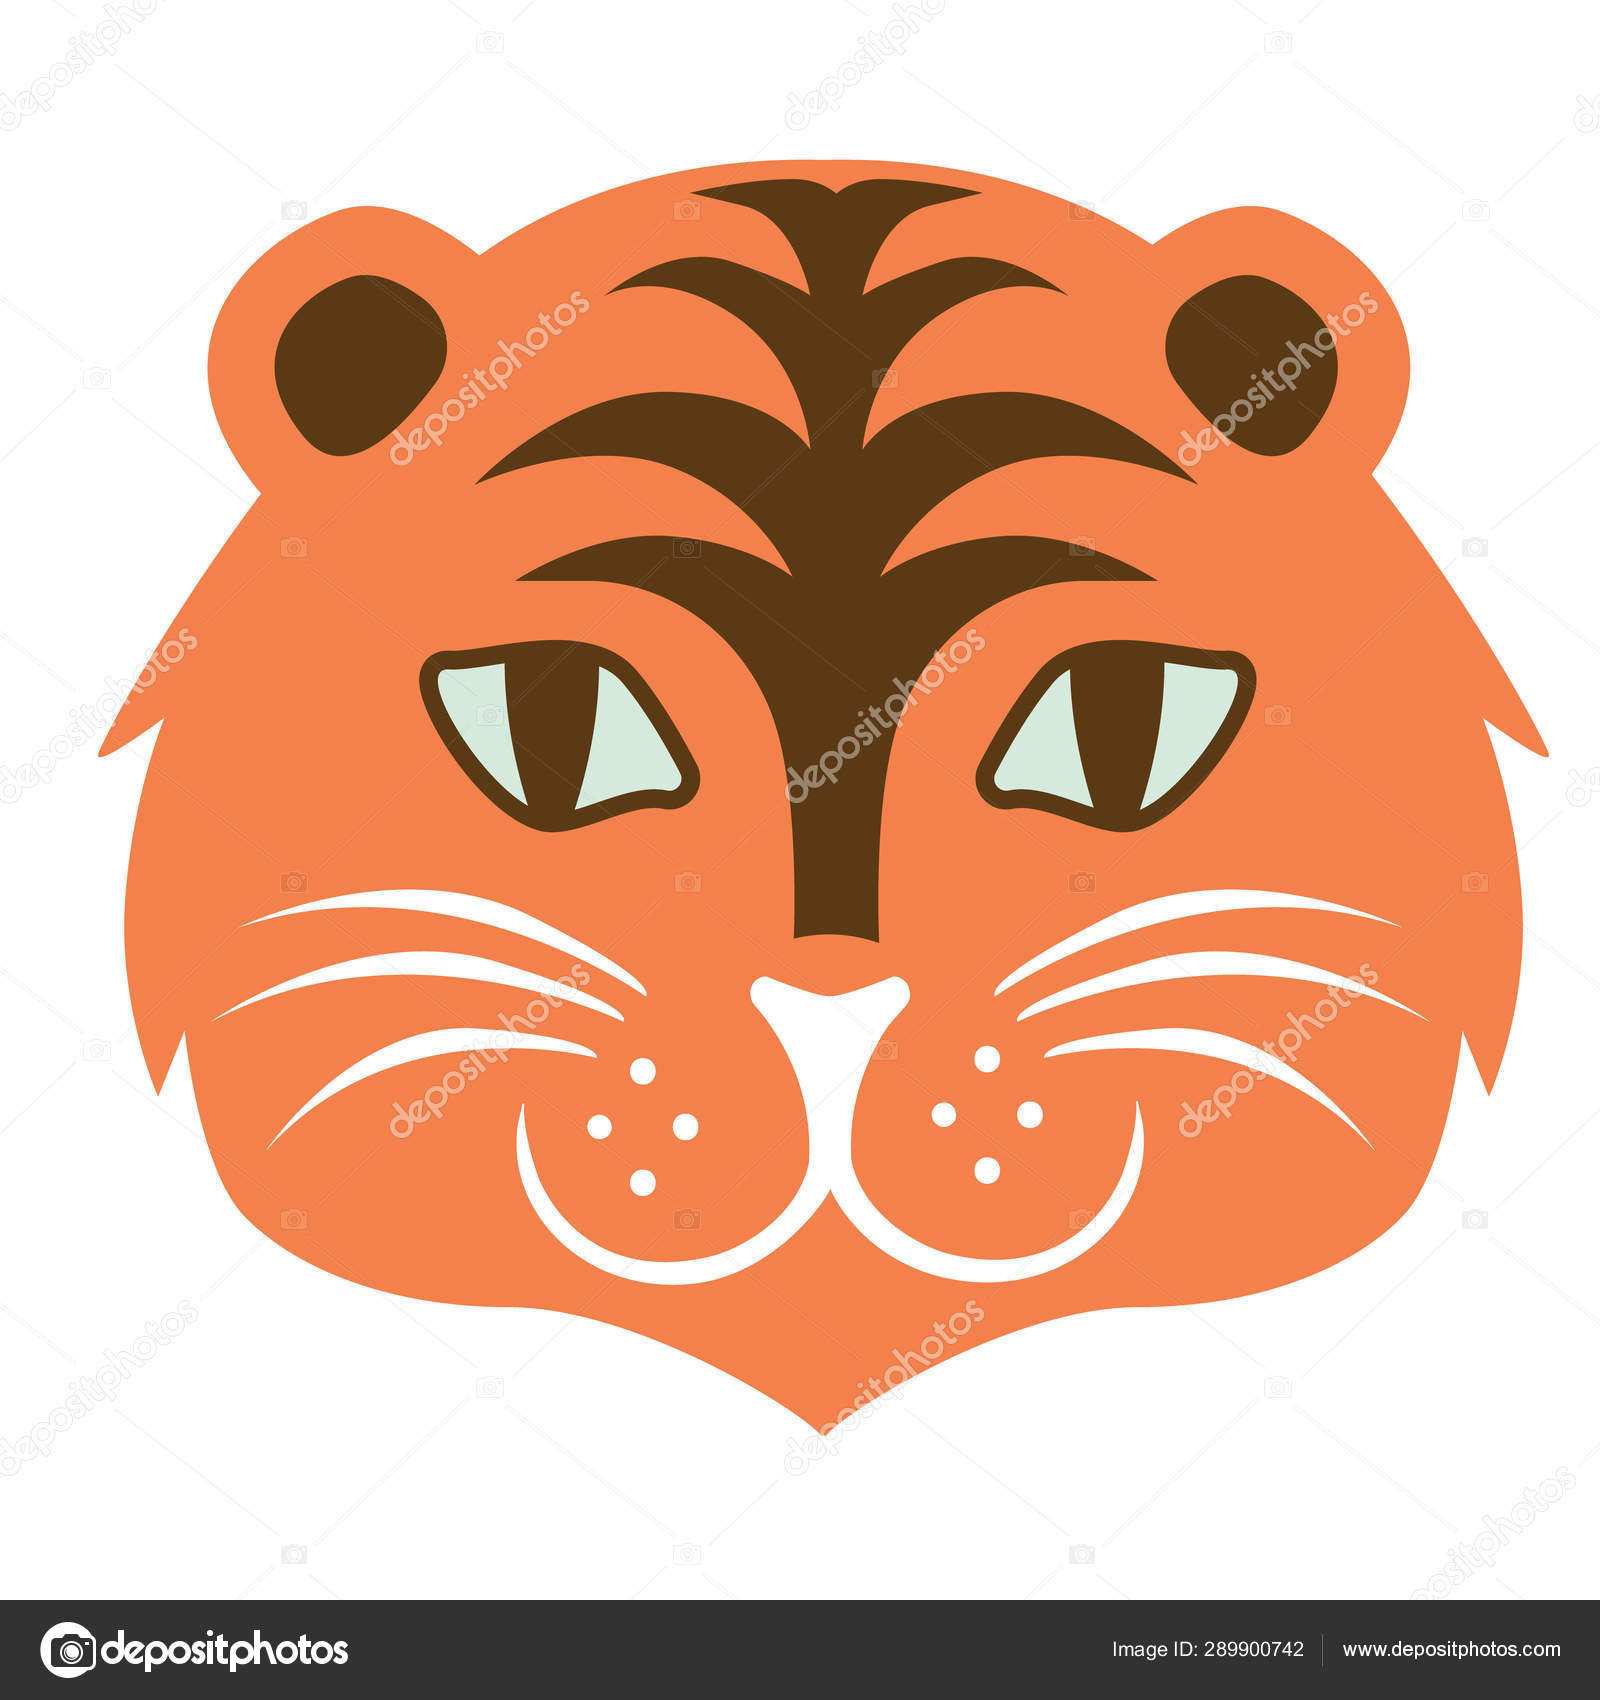 https://st4.depositphotos.com/1269954/28990/v/1600/depositphotos_289900742-stock-illustration-tiger-face-illustration-on-white.jpg